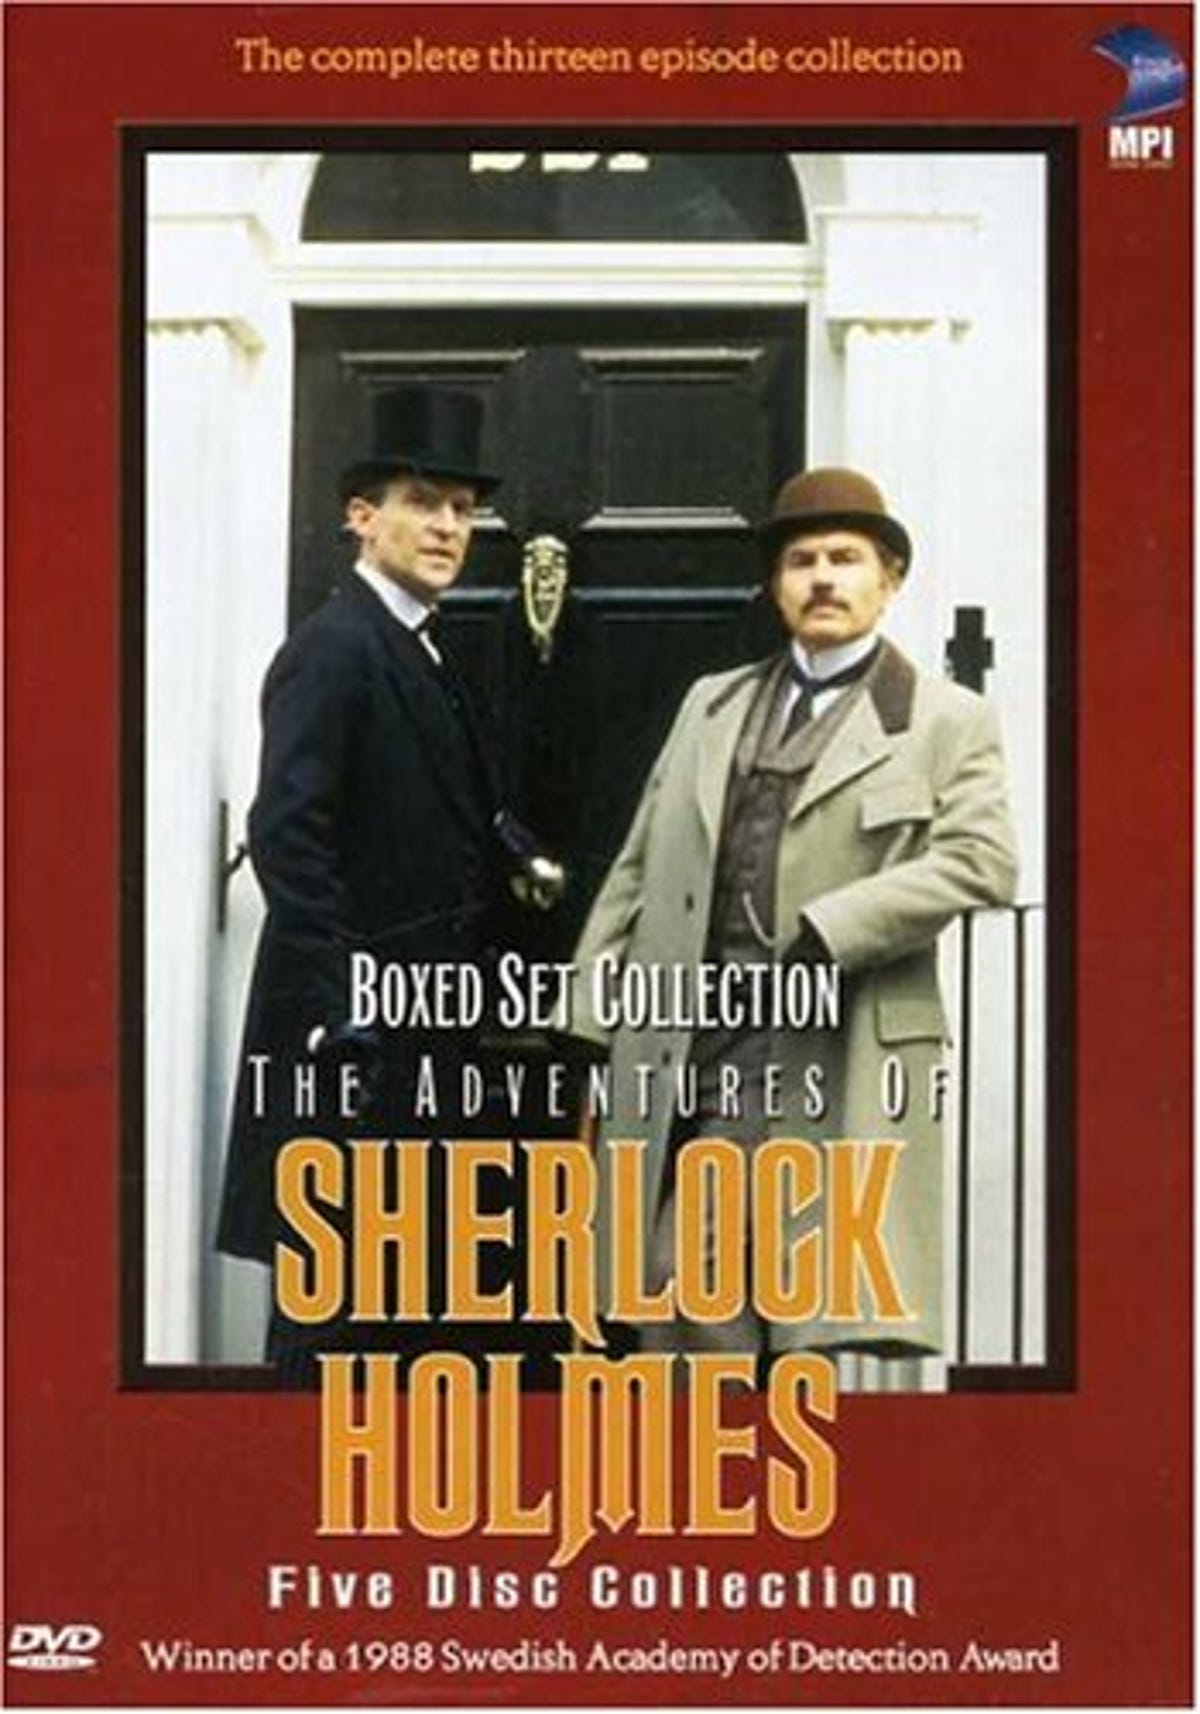 The_Adventures_of_Sherlock_Holmes.jpg